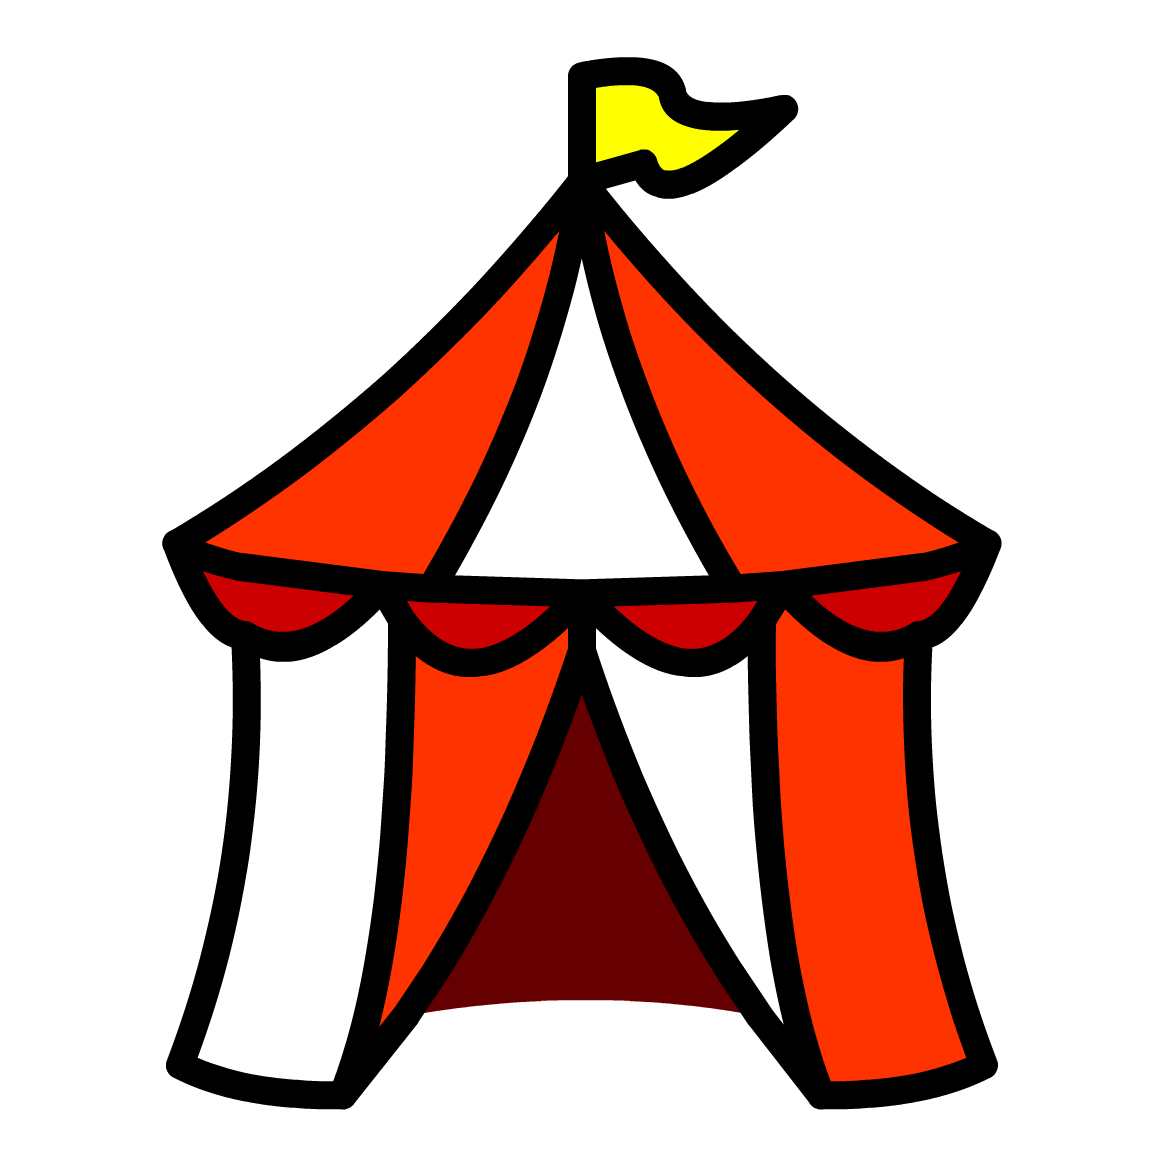 Circus Tent pin - Club Penguin Wiki - The free, editable ...